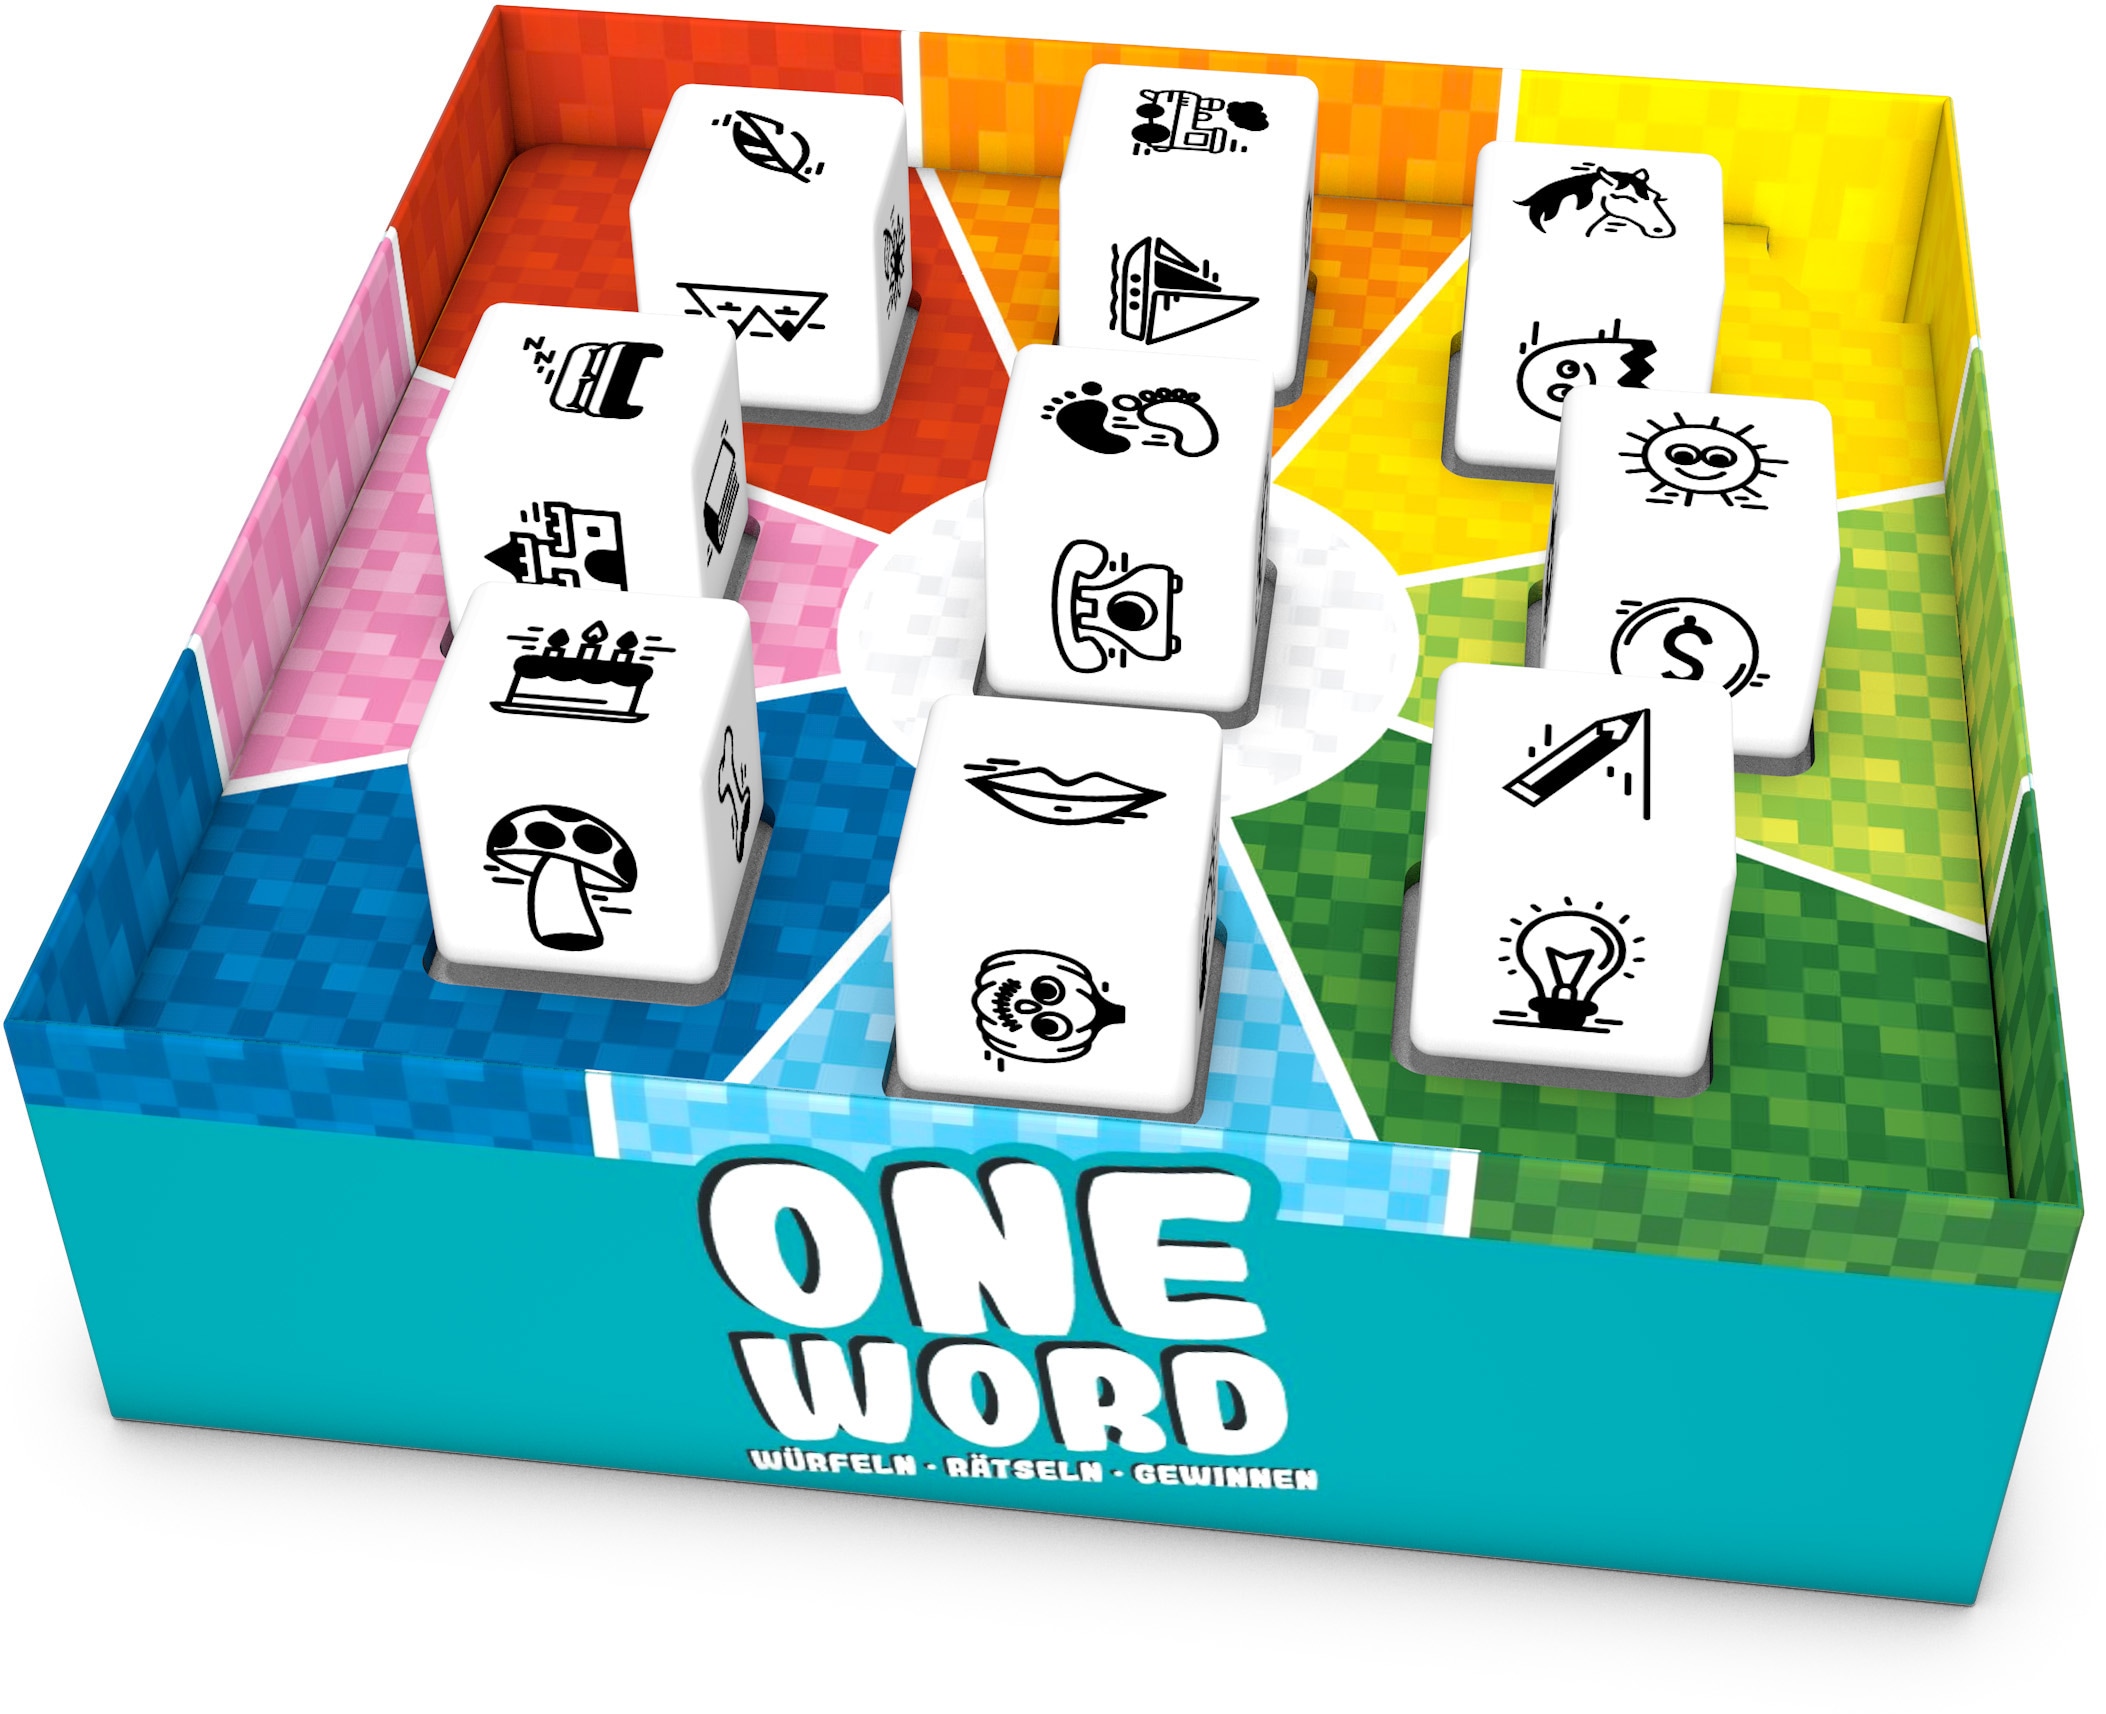 Noris Spiel »One Word«, Made in Germany